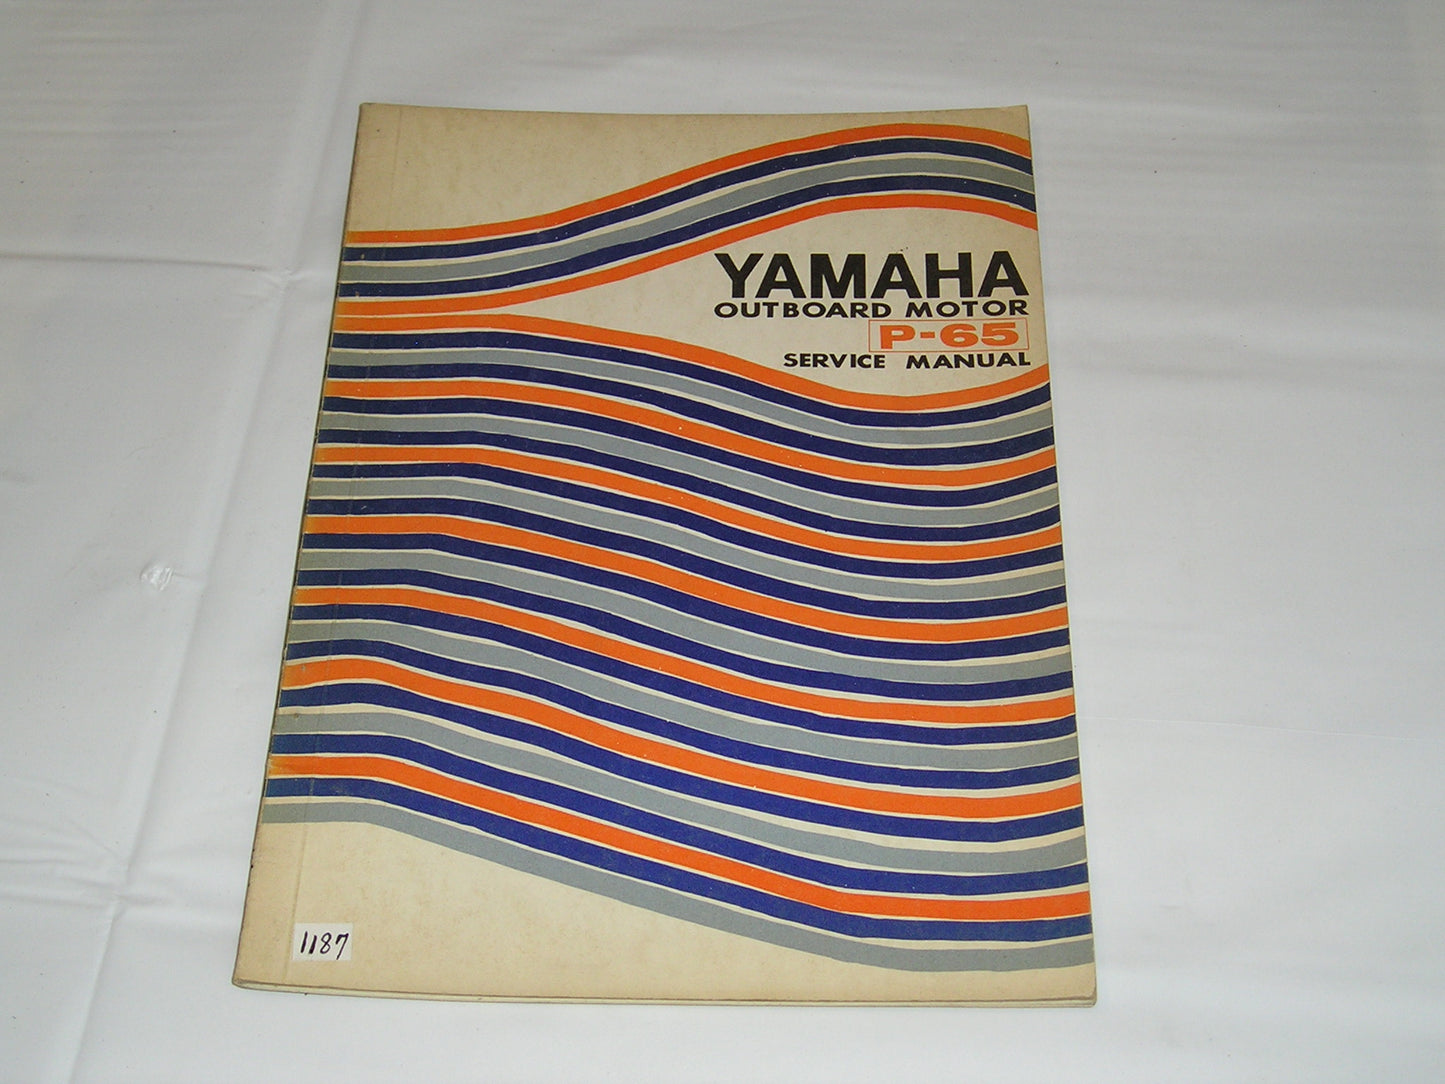 YAMAHA P-65  Outboard Motor  Service Manual  #1187